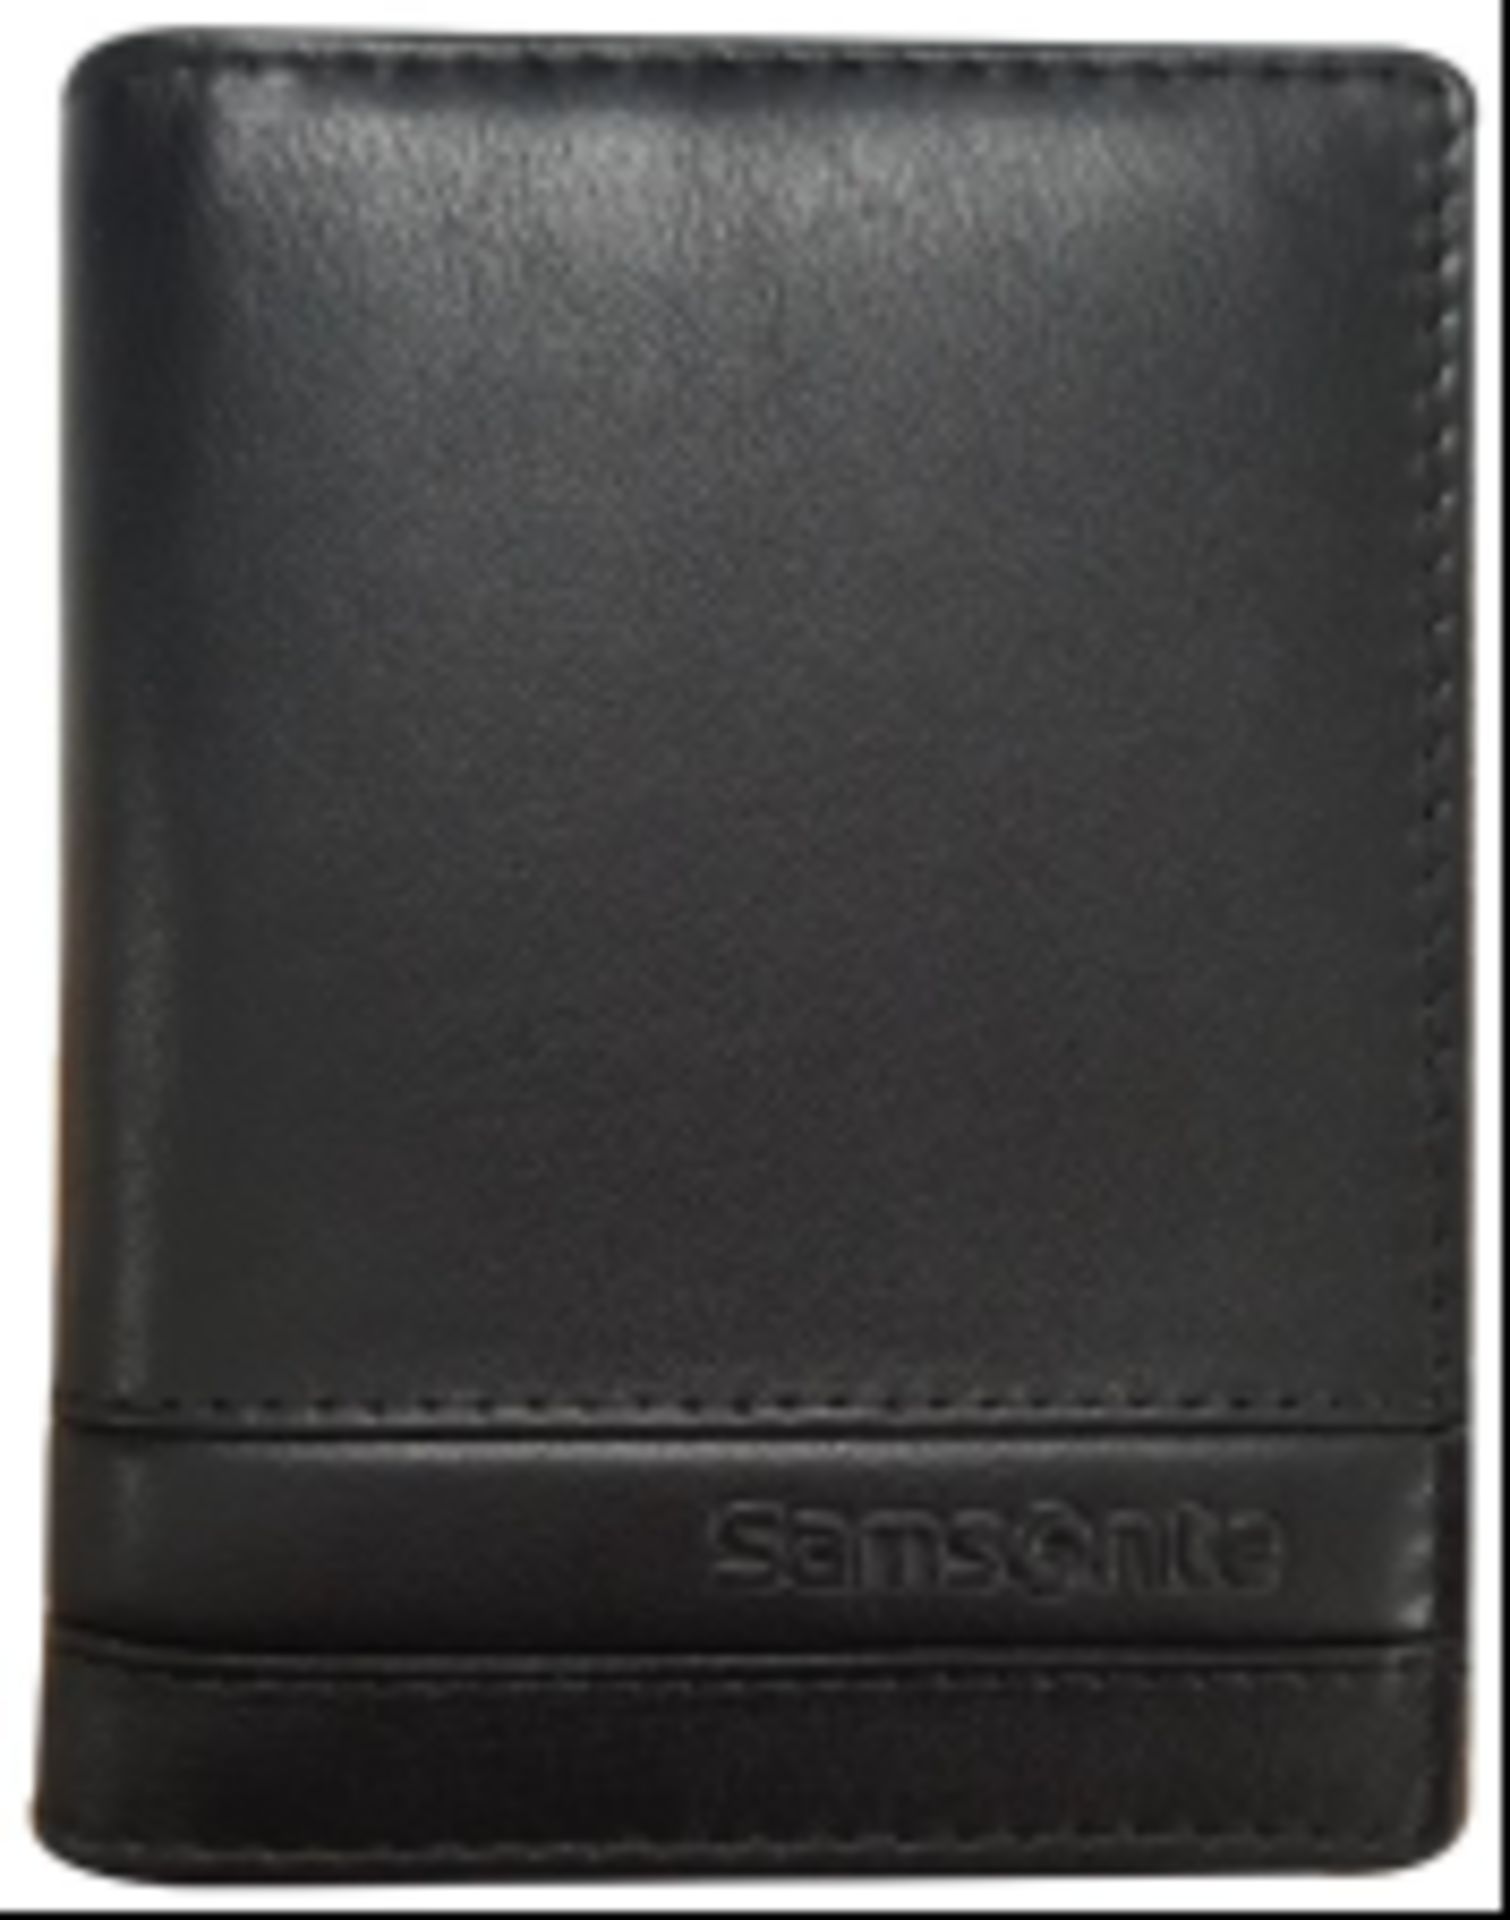 V *TRADE QTY* Brand New Samsonite Gents Black Leather Card Holder - 12 Credit Card Slots - RRP: £ - Image 3 of 3